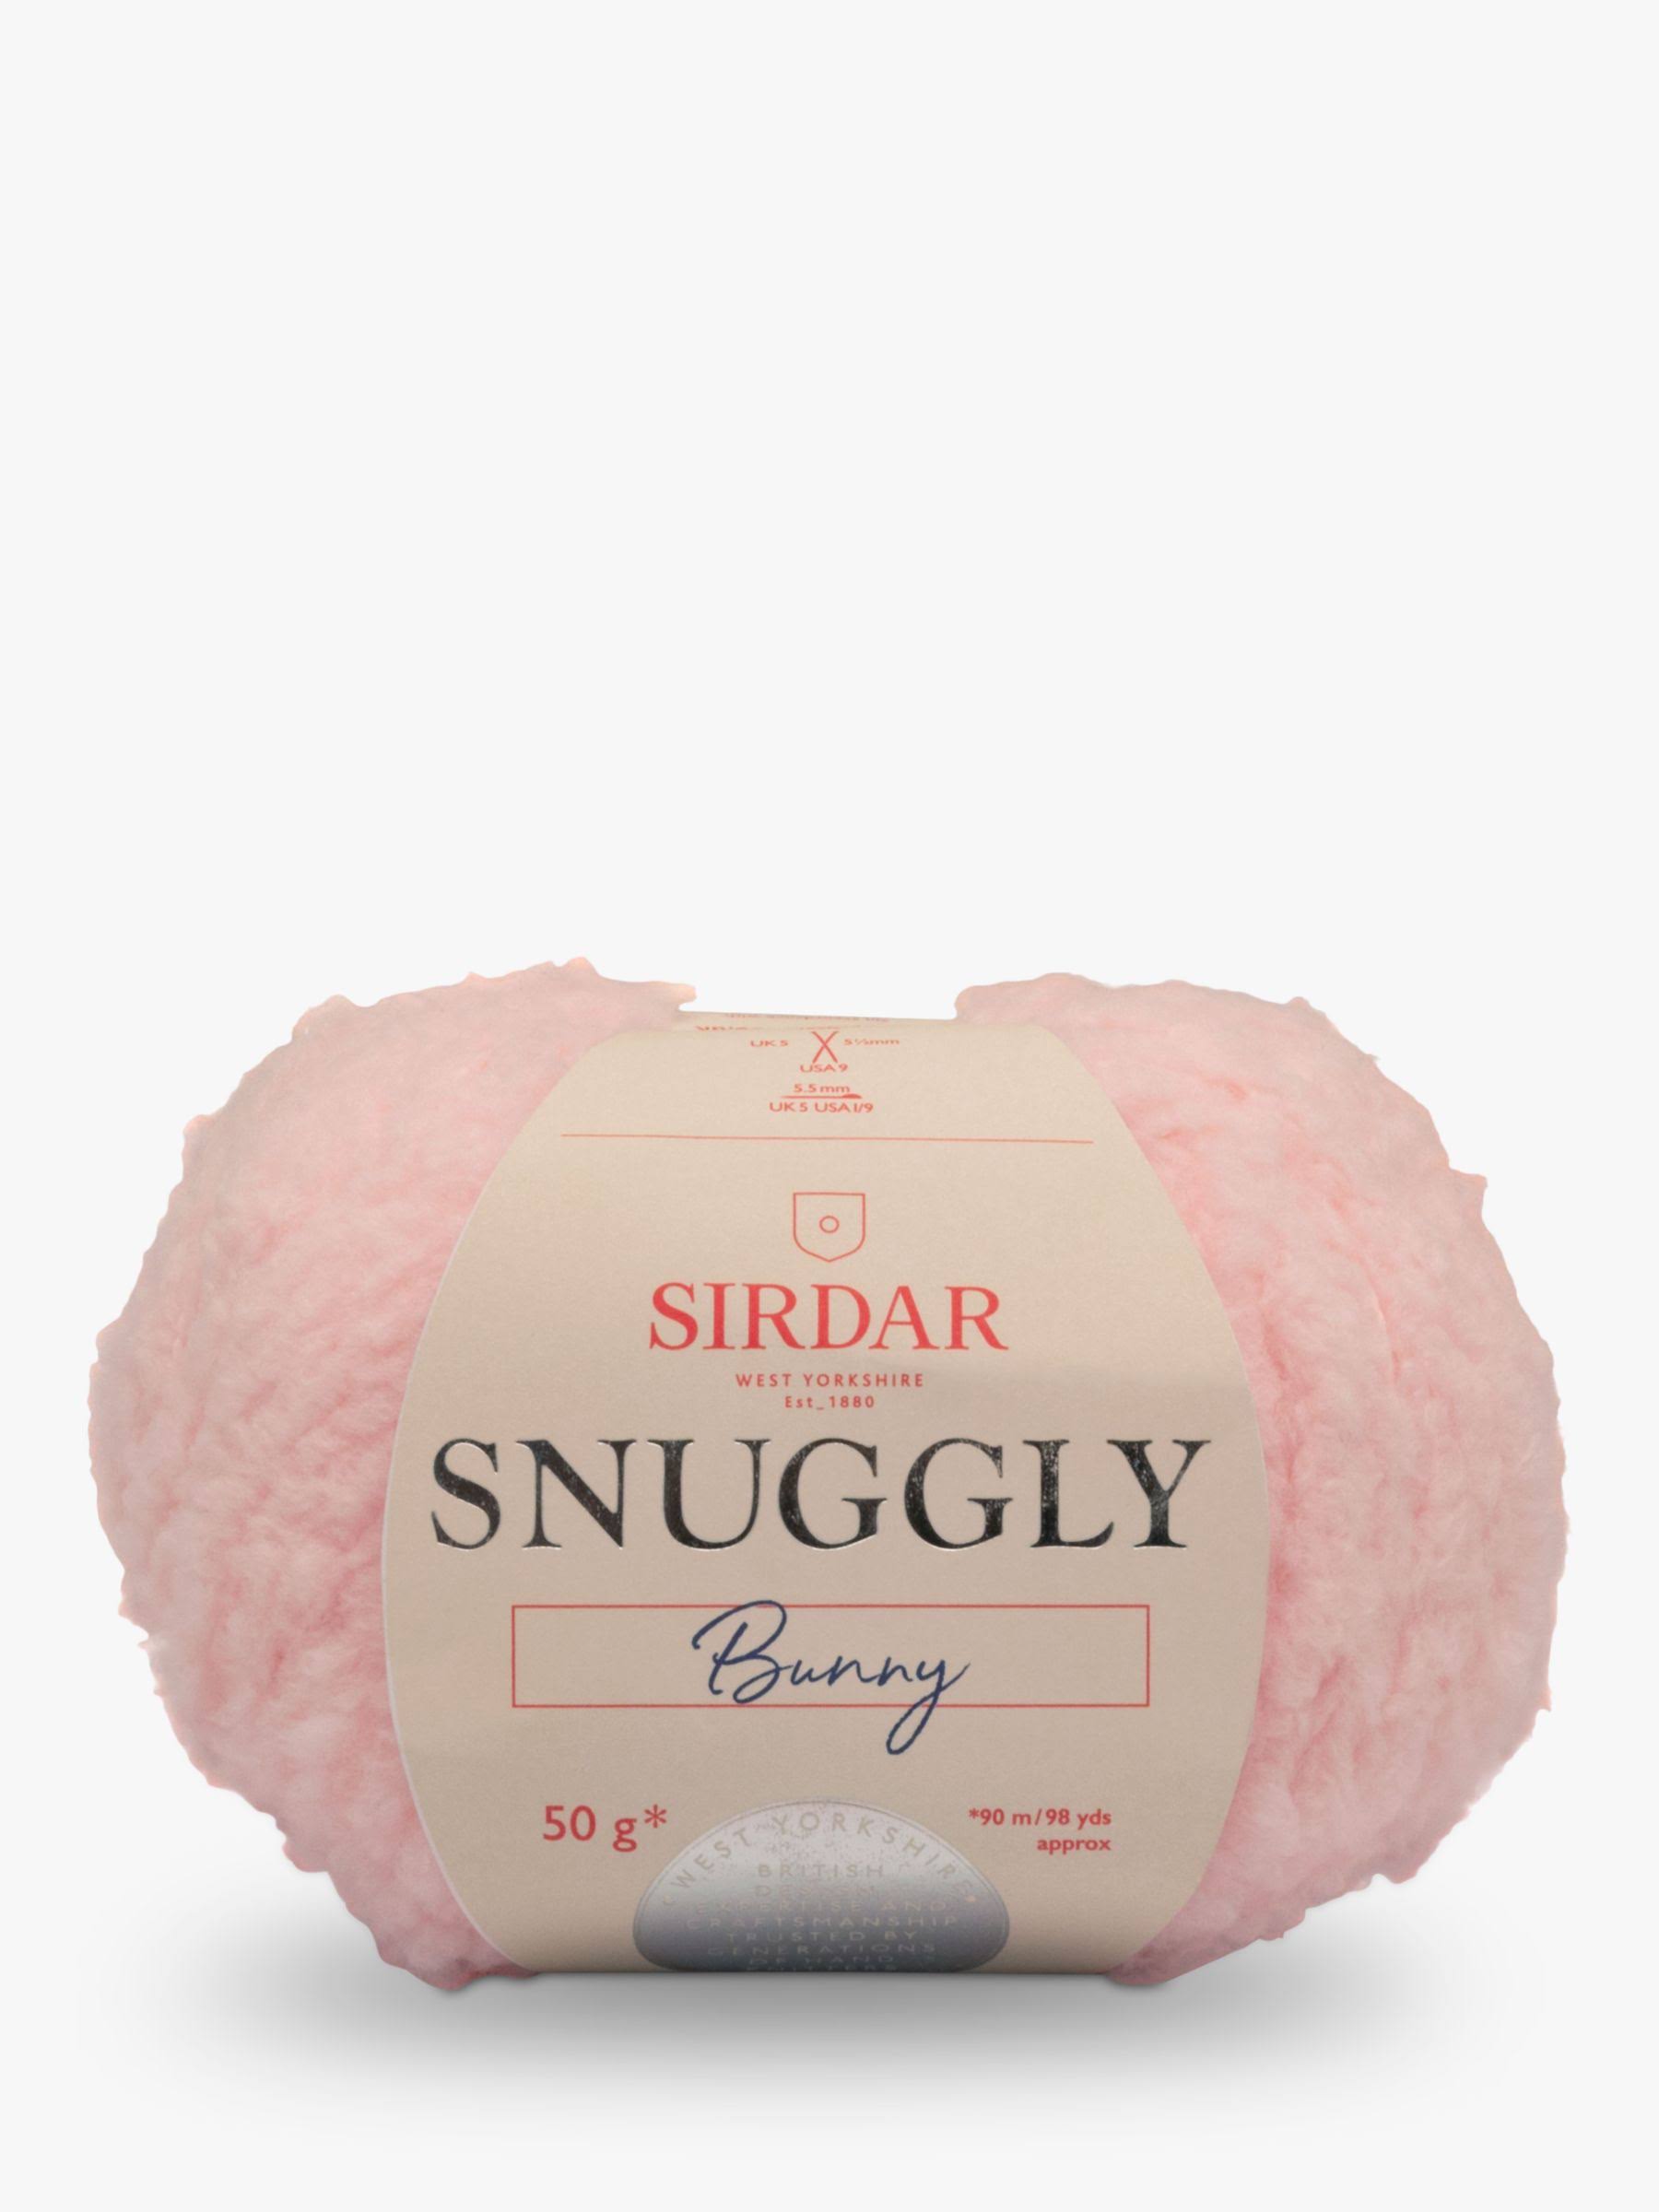 Sirdar Snuggly Bunny 314 Piglet 50g